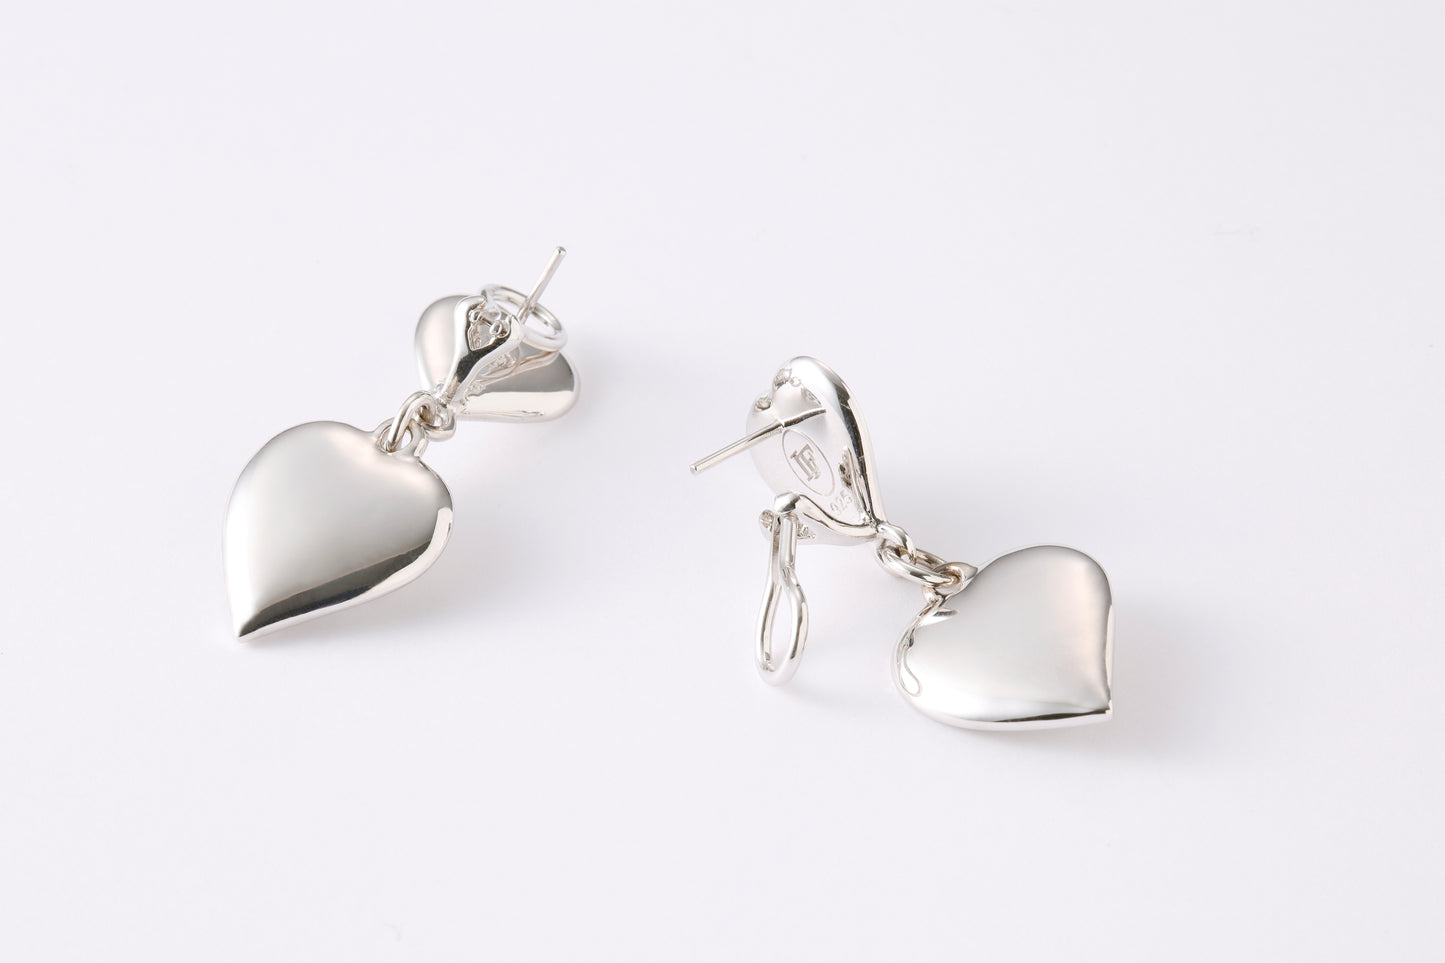 Heart Silver Dangle Earrings Cabochon Swarovski Crystal